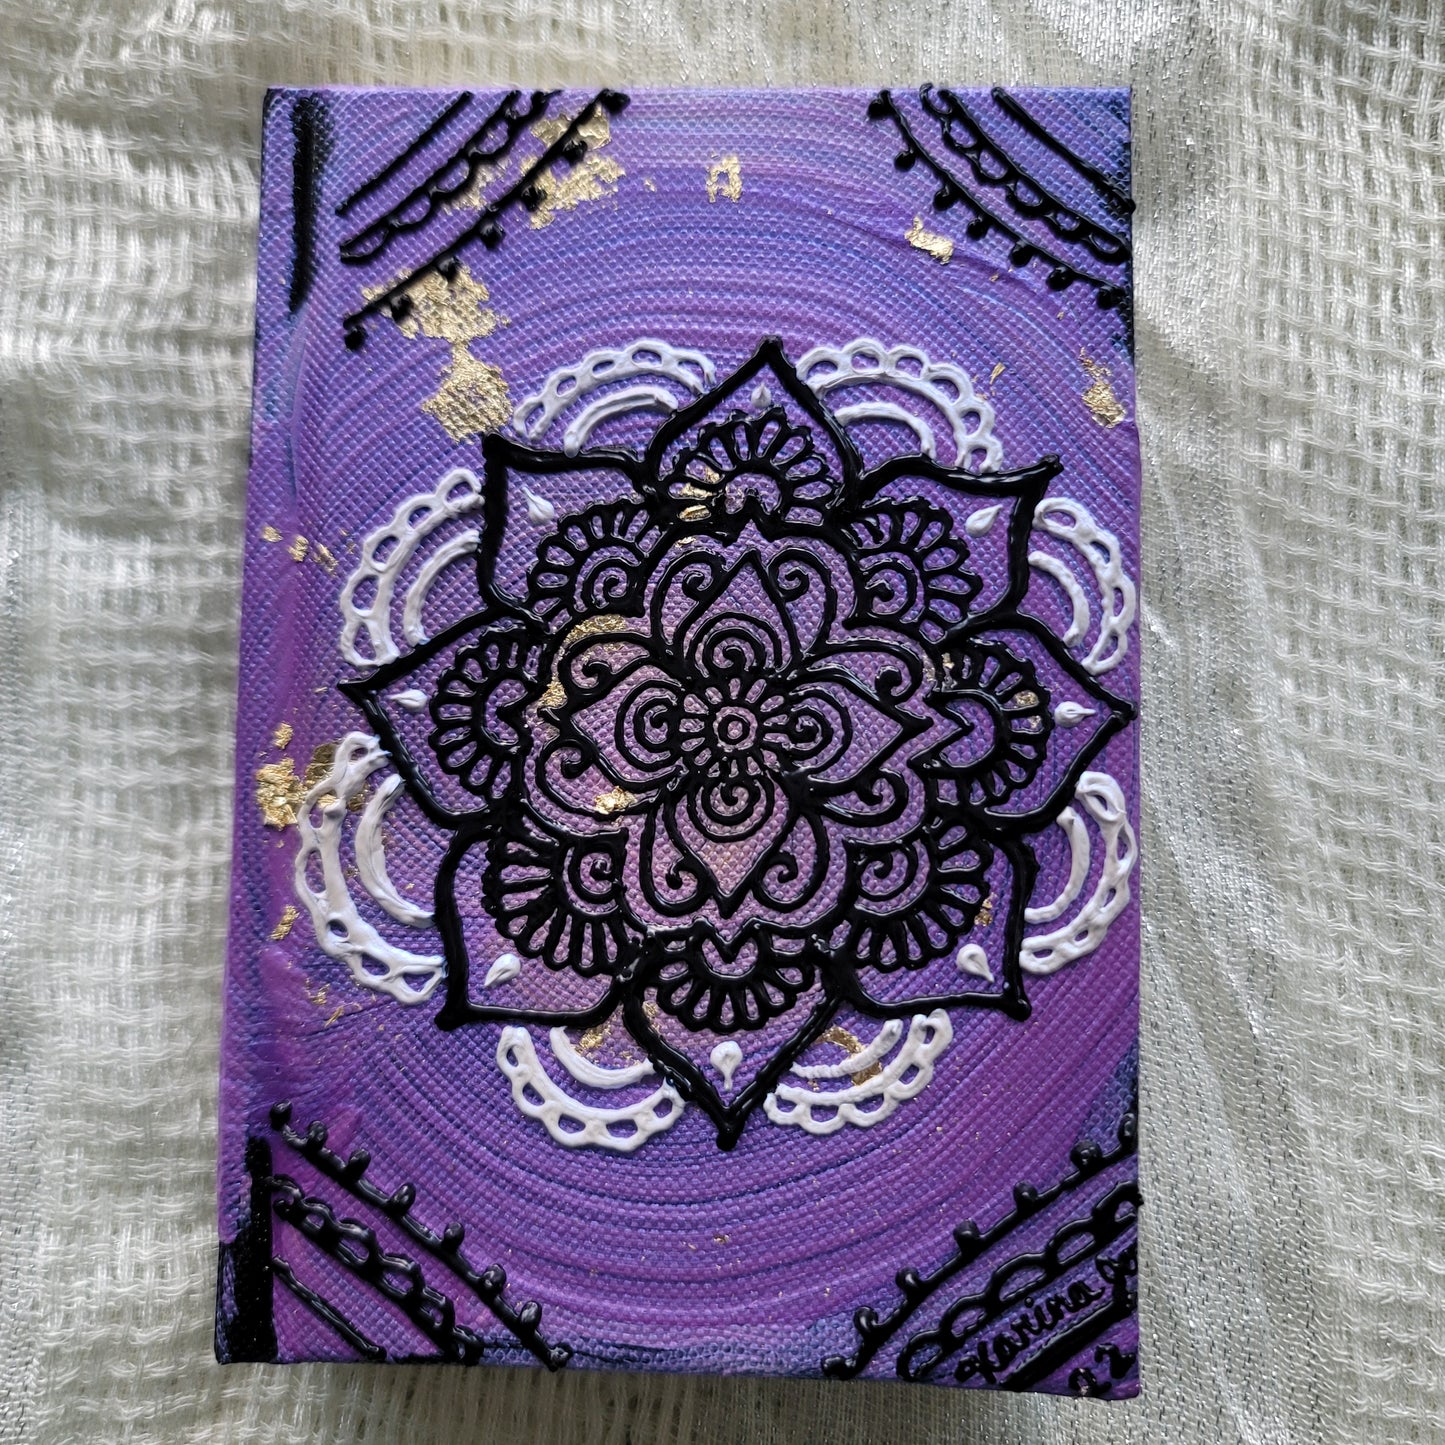 Release 4x6" hand-painted sketchbook / journal